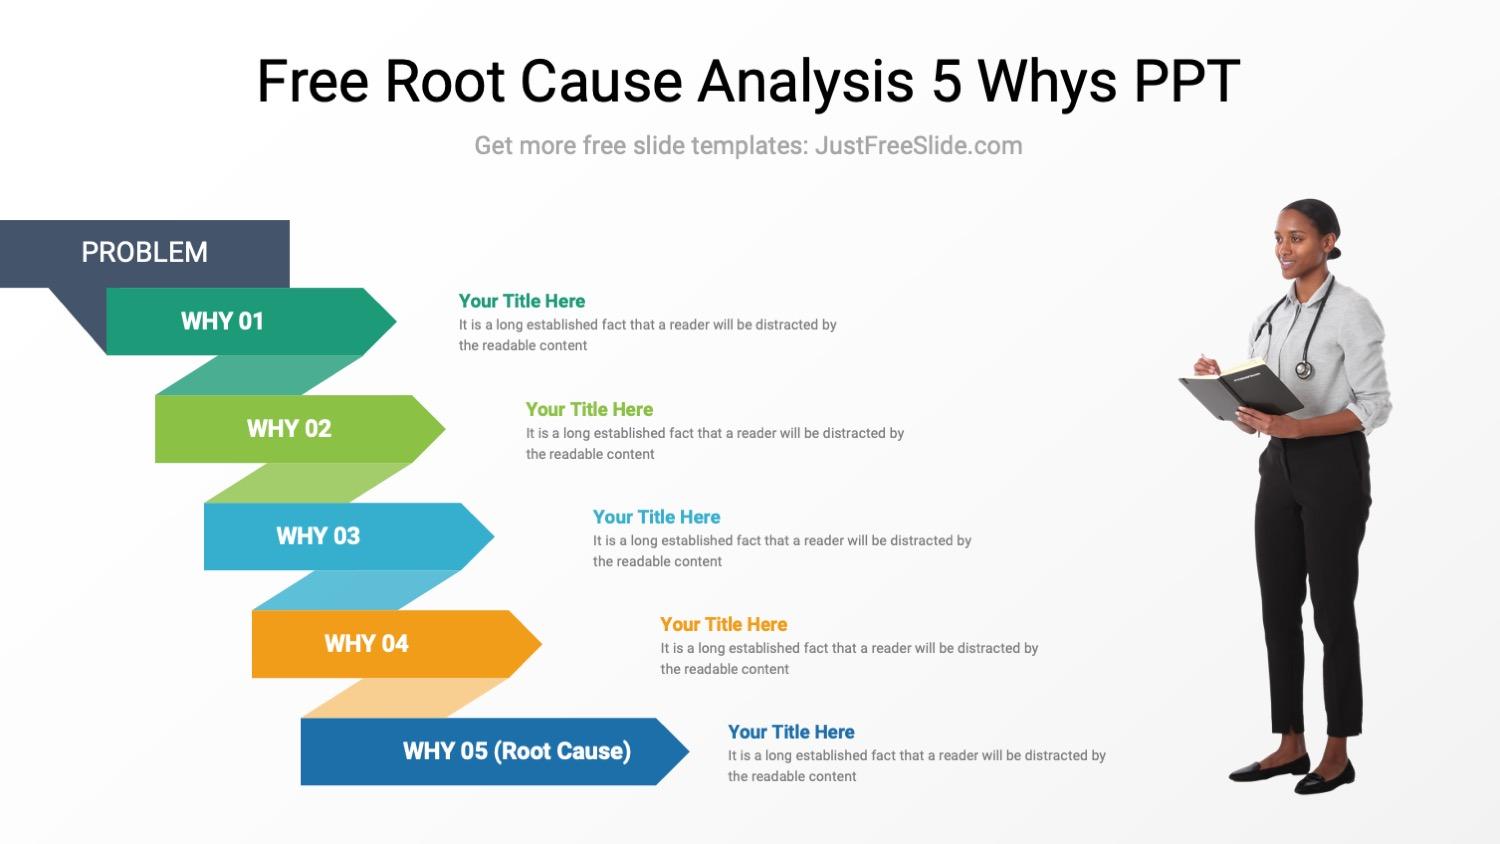 Root Cause Analysis 5 Whys PPT (6 Slides)